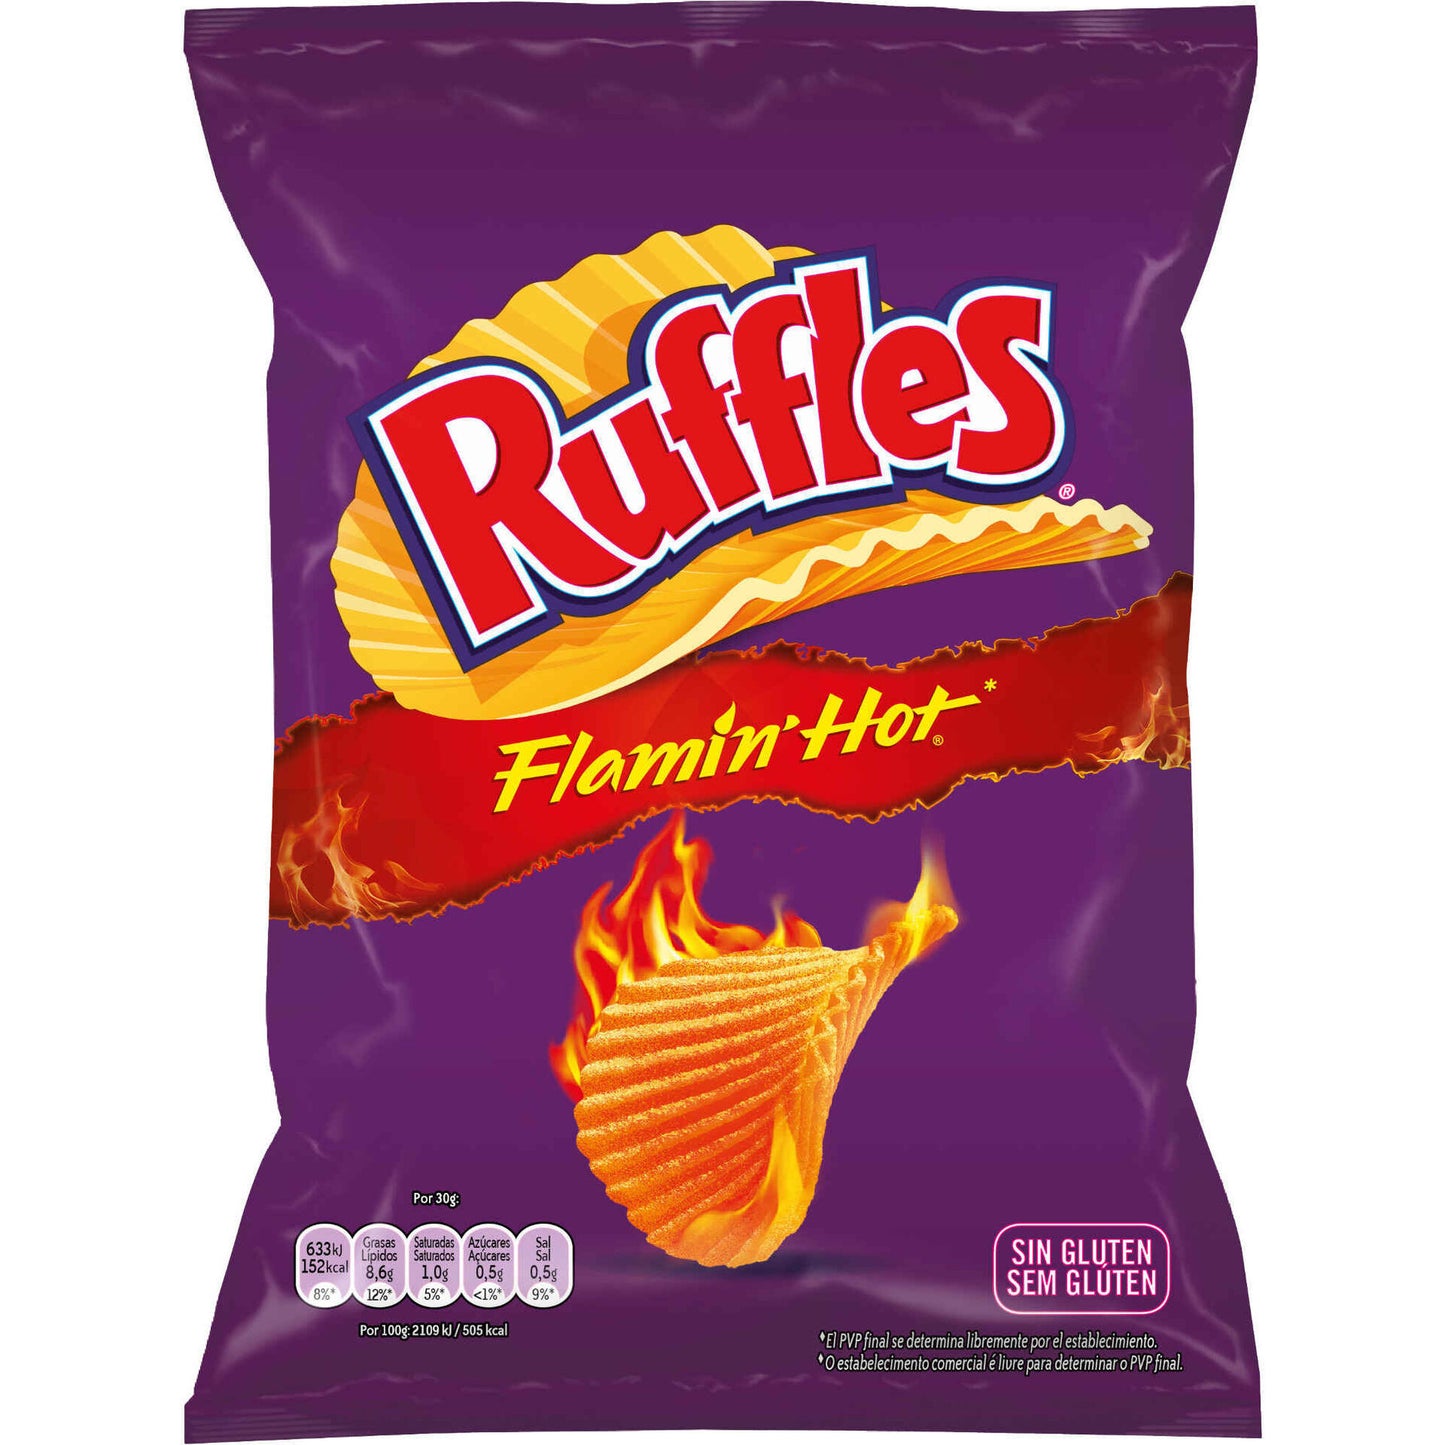 Flamin'Hot Ruffles 75g